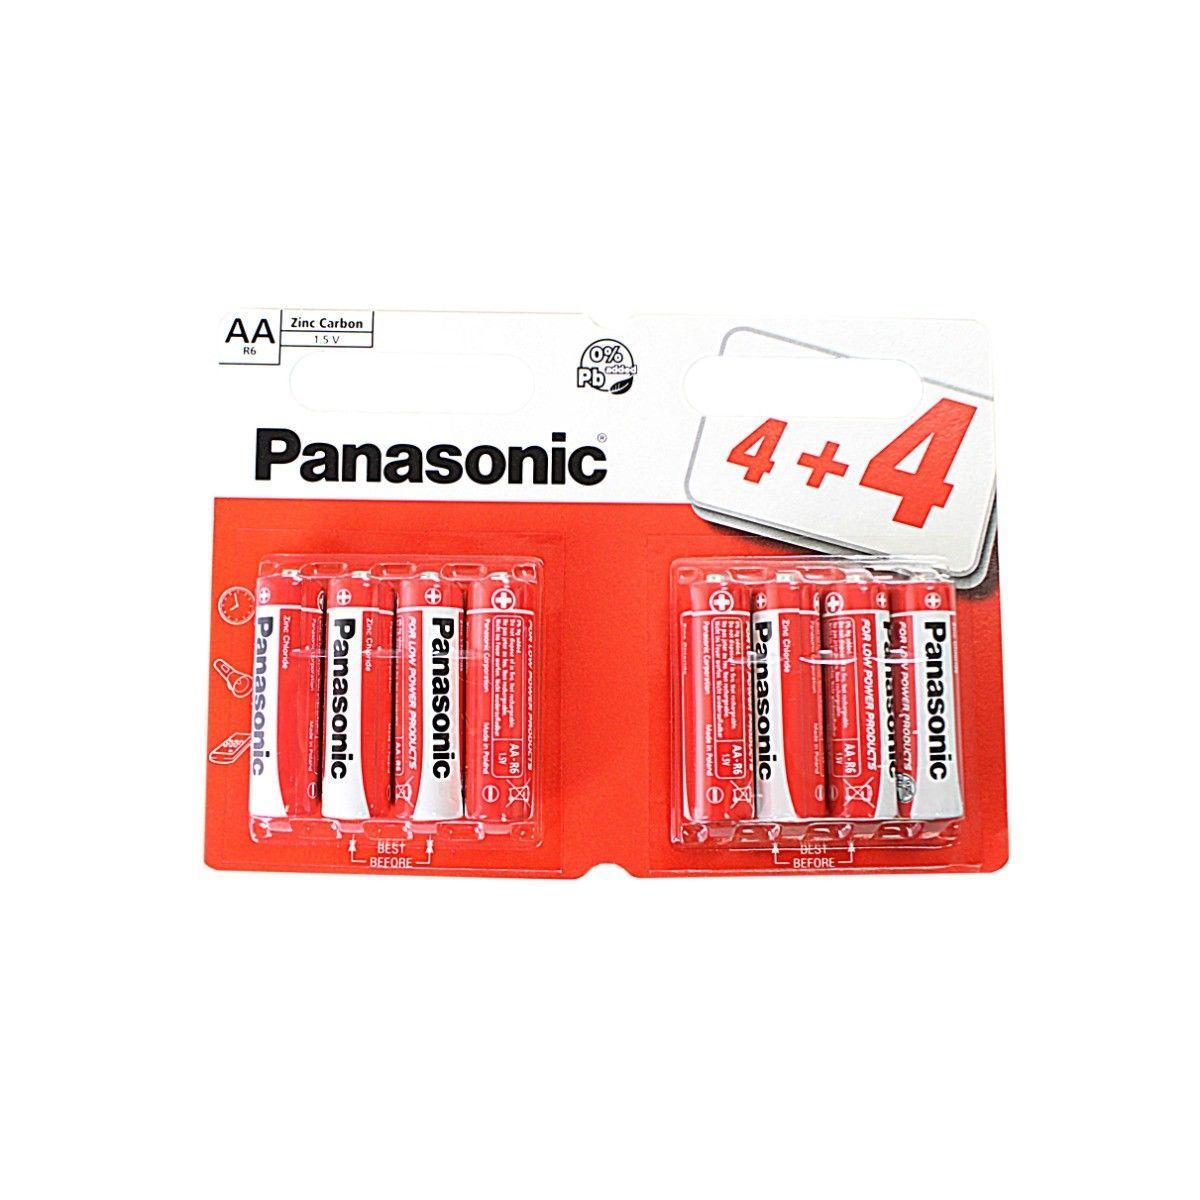 8x Panasonic AA Batteries Zinc Carbon R6 1.5V Battery PANAR6RB8 A (Large Letter Rate)